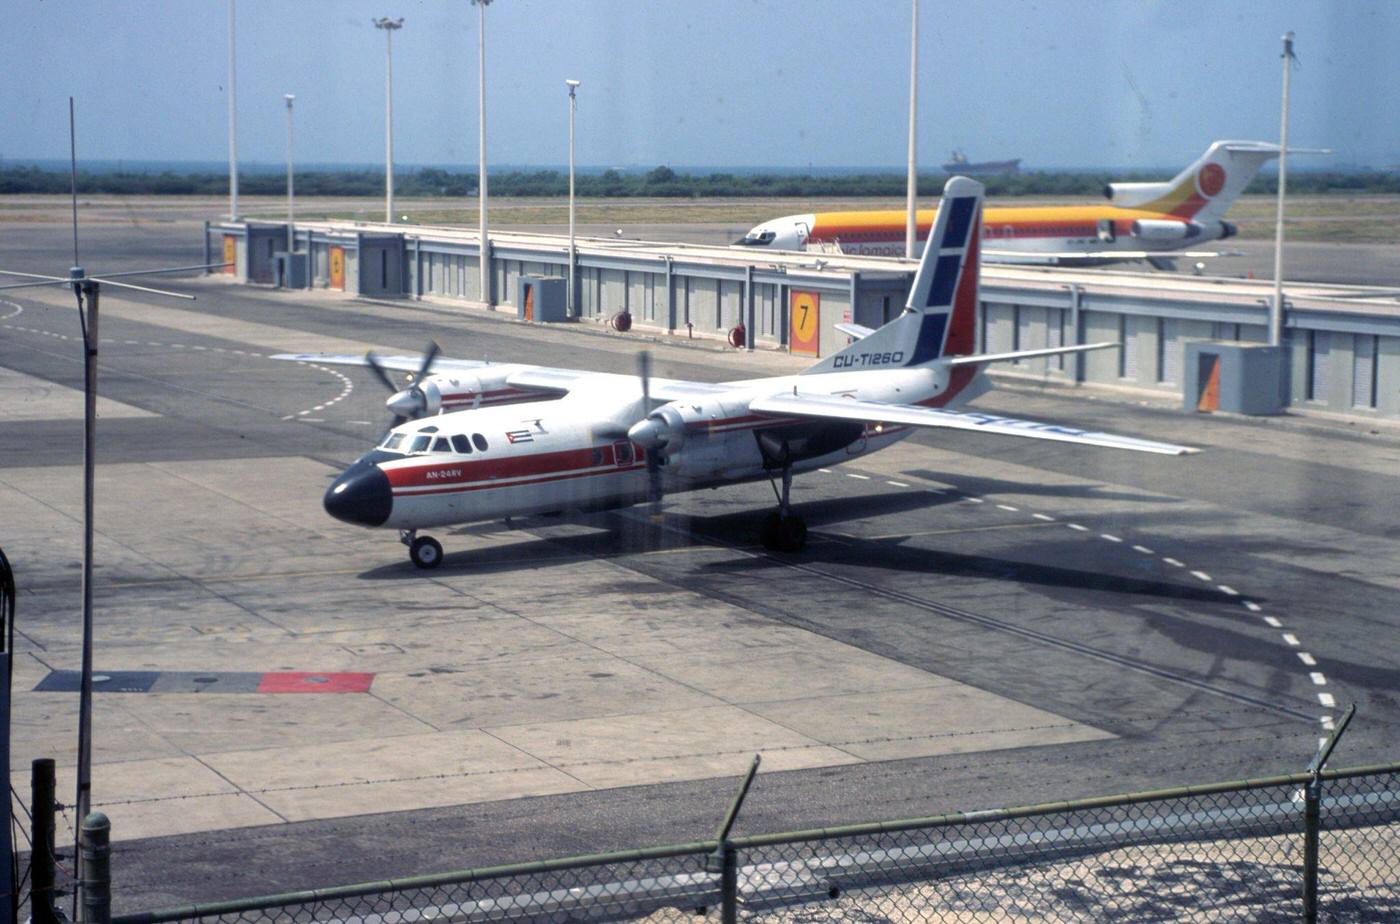 An AeroCuba plane at José Martí International Airport, Havana, Cuba, 1991.